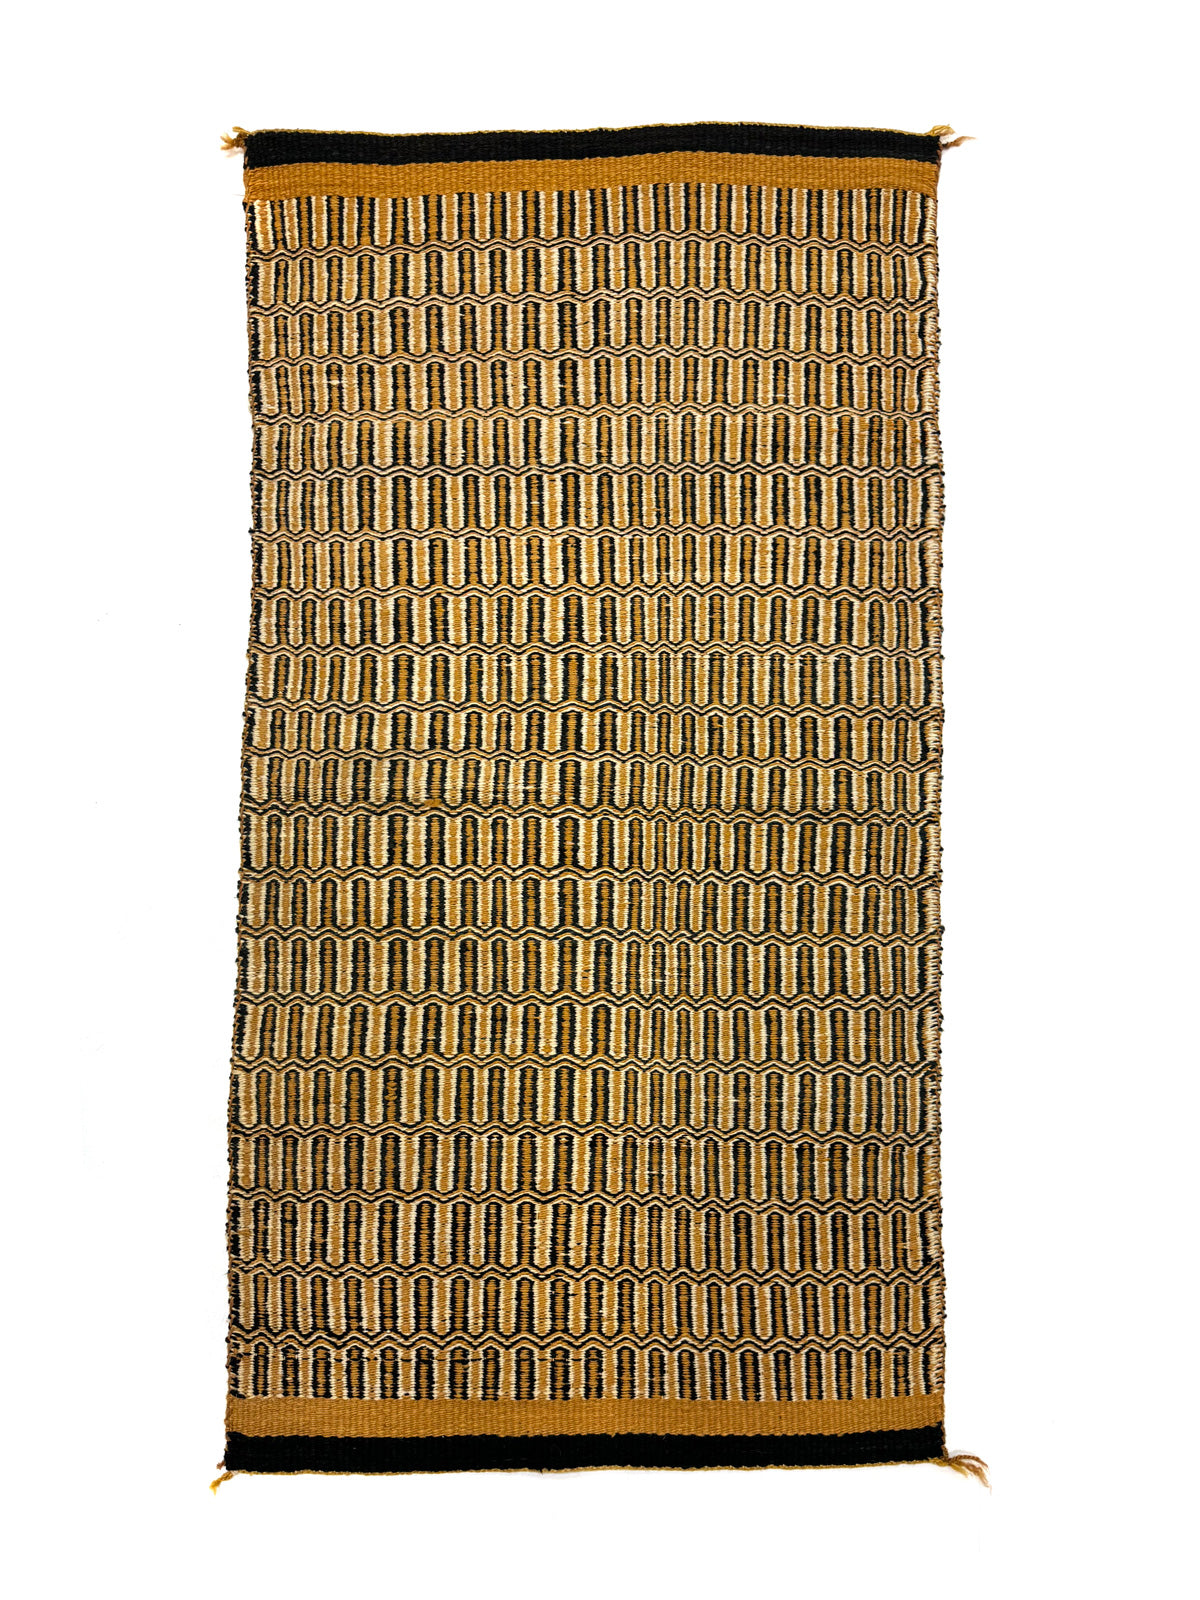 Navajo Twill Weave Rug c. 1930-40s, 61.5" x 30.5" (T6602)